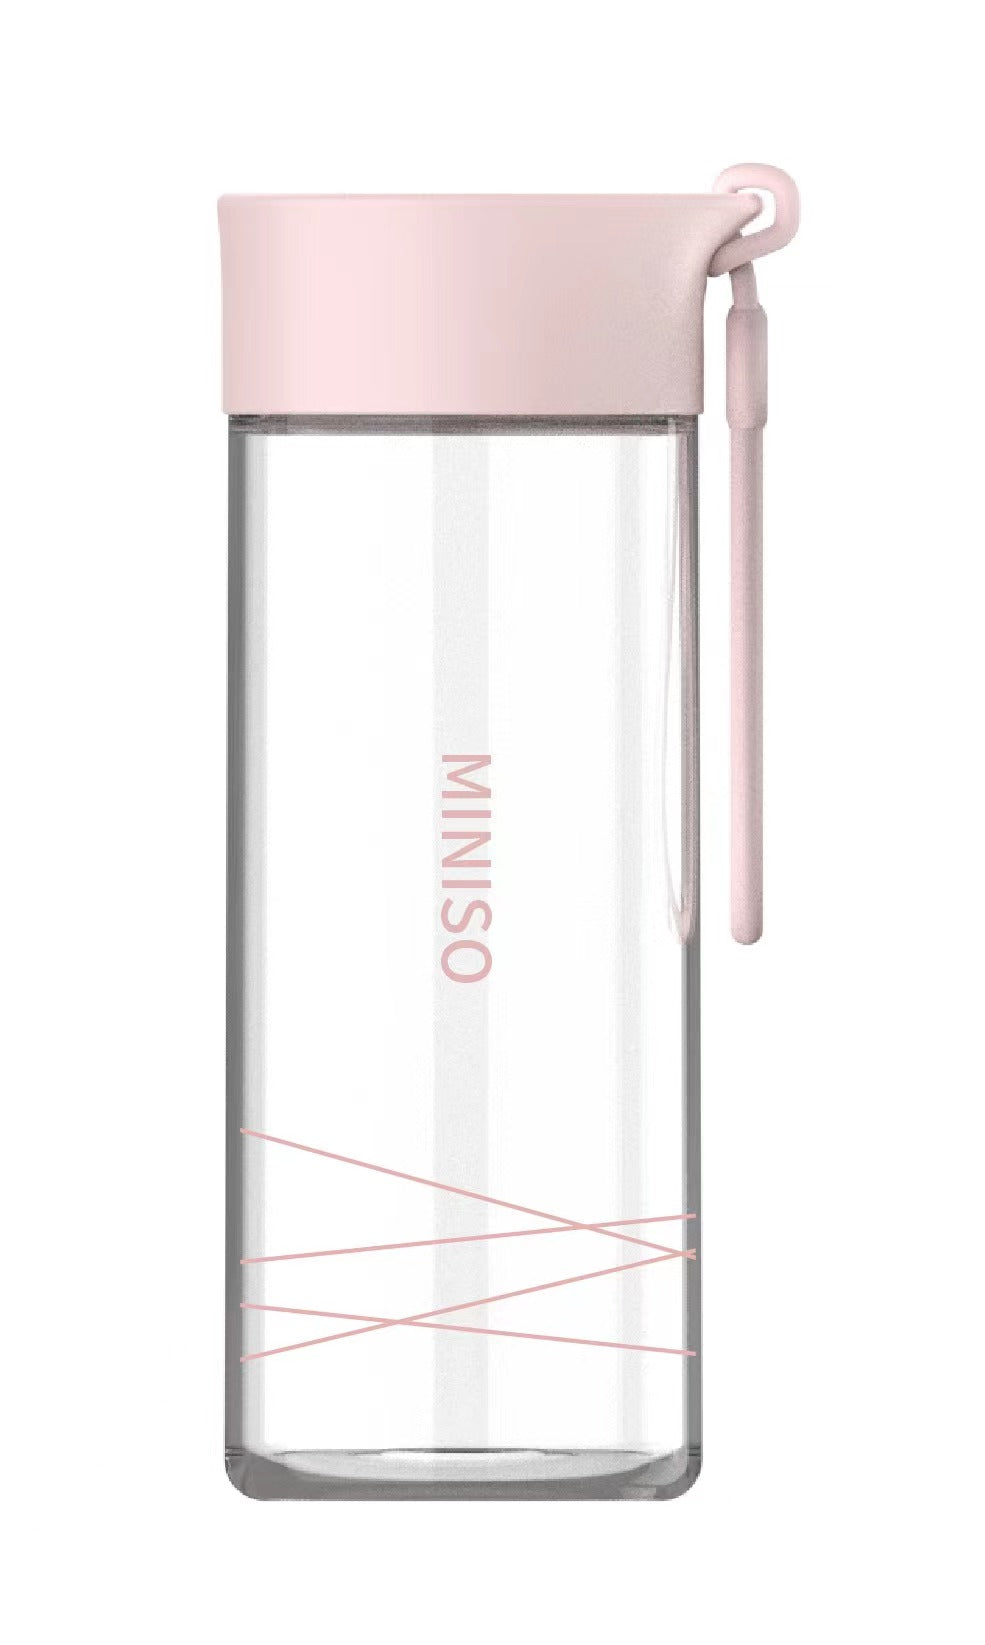 MINISO HIGH BOROSILICATE GLASS BOTTLE WITH HANDLE 300ML(PINK) 2013499411101 HIGH BOROSILICATE GLASS WATER BOTTLE